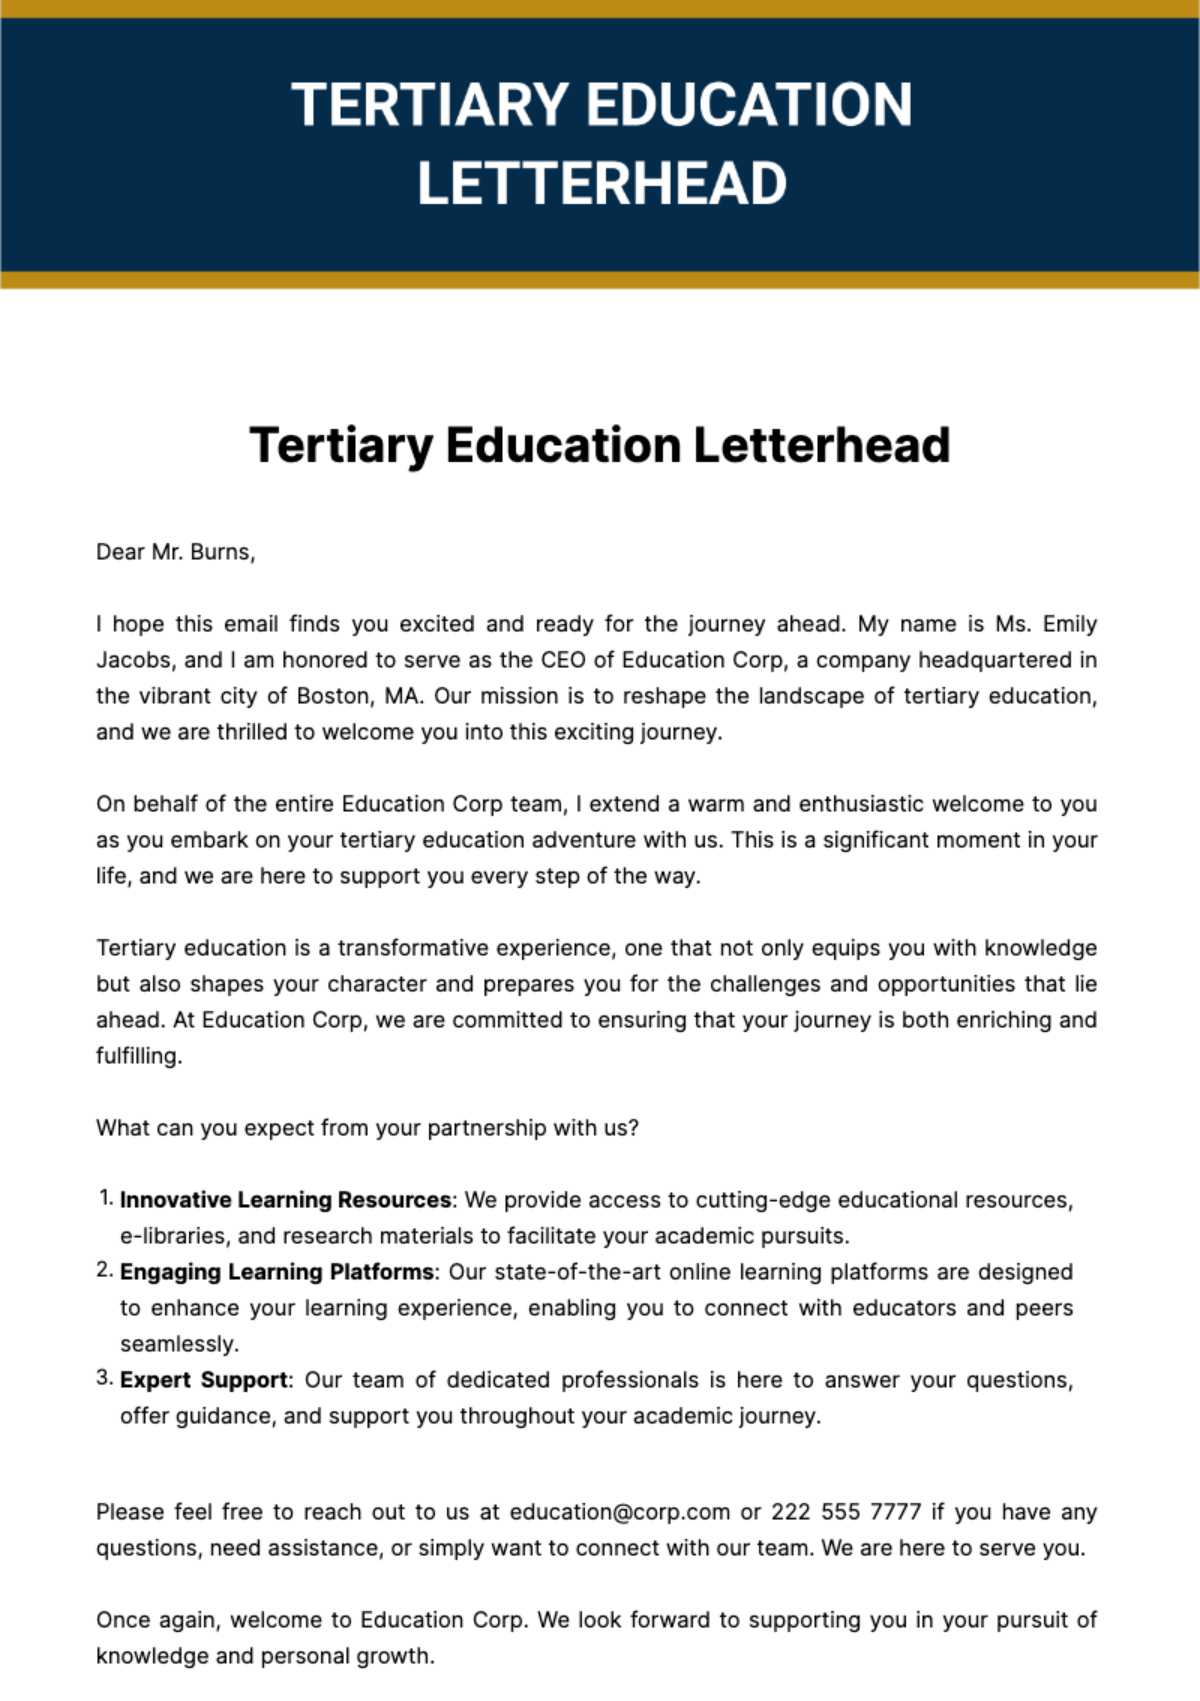 Free Tertiary Education Letterhead Template